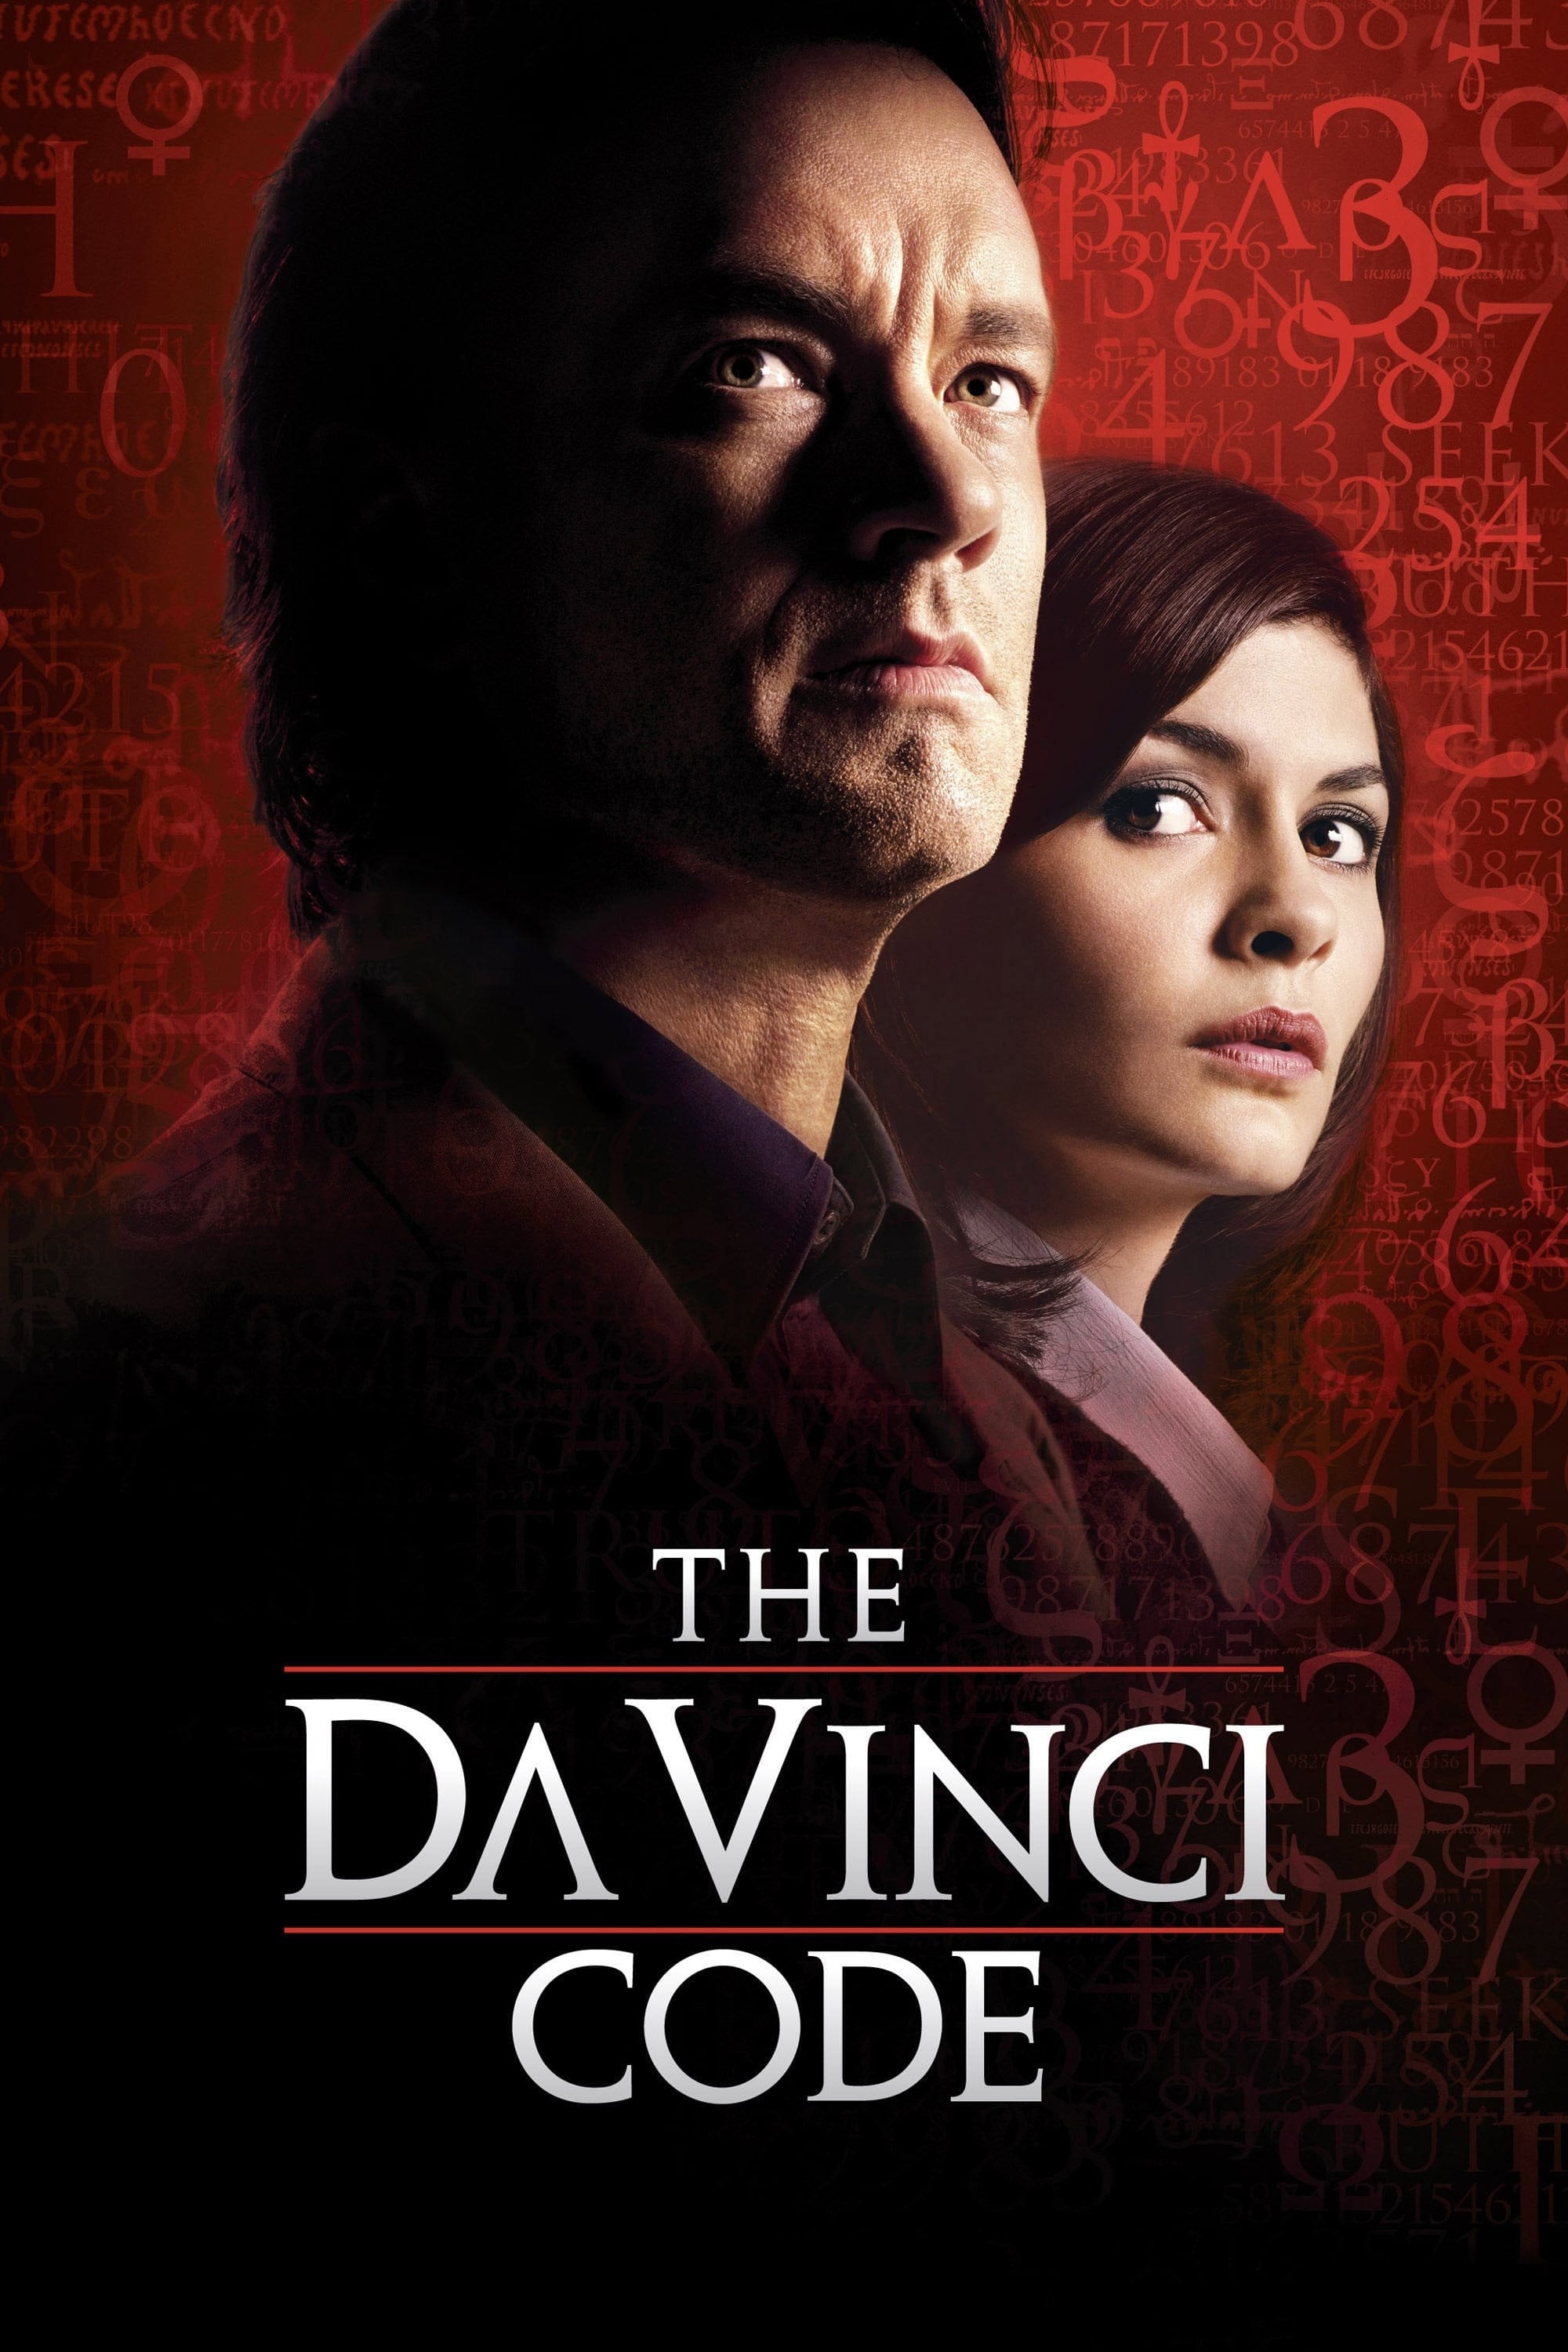 Poster The Da Vinci Code - Sakrileg